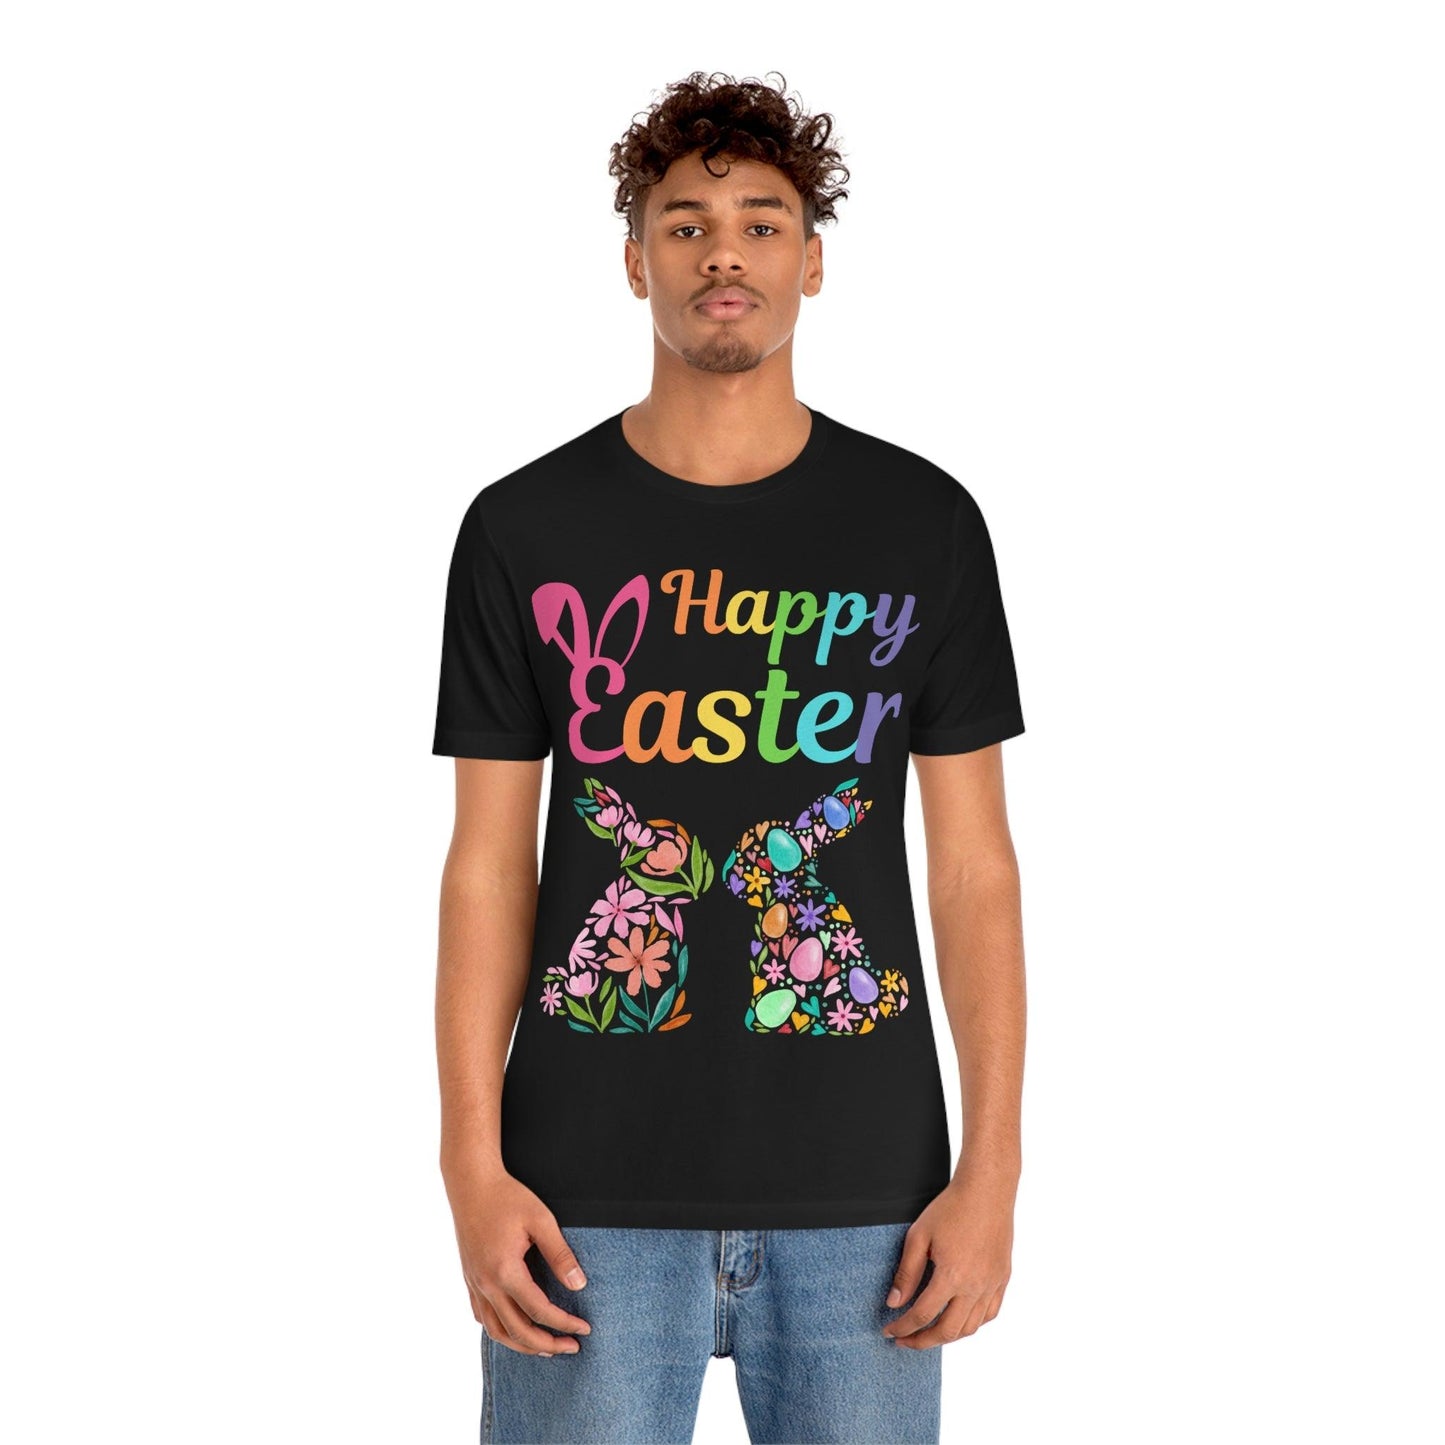 Happy Easter Shirt Easter Gift for women and Men - Shamrock Shirt Irish Shirt